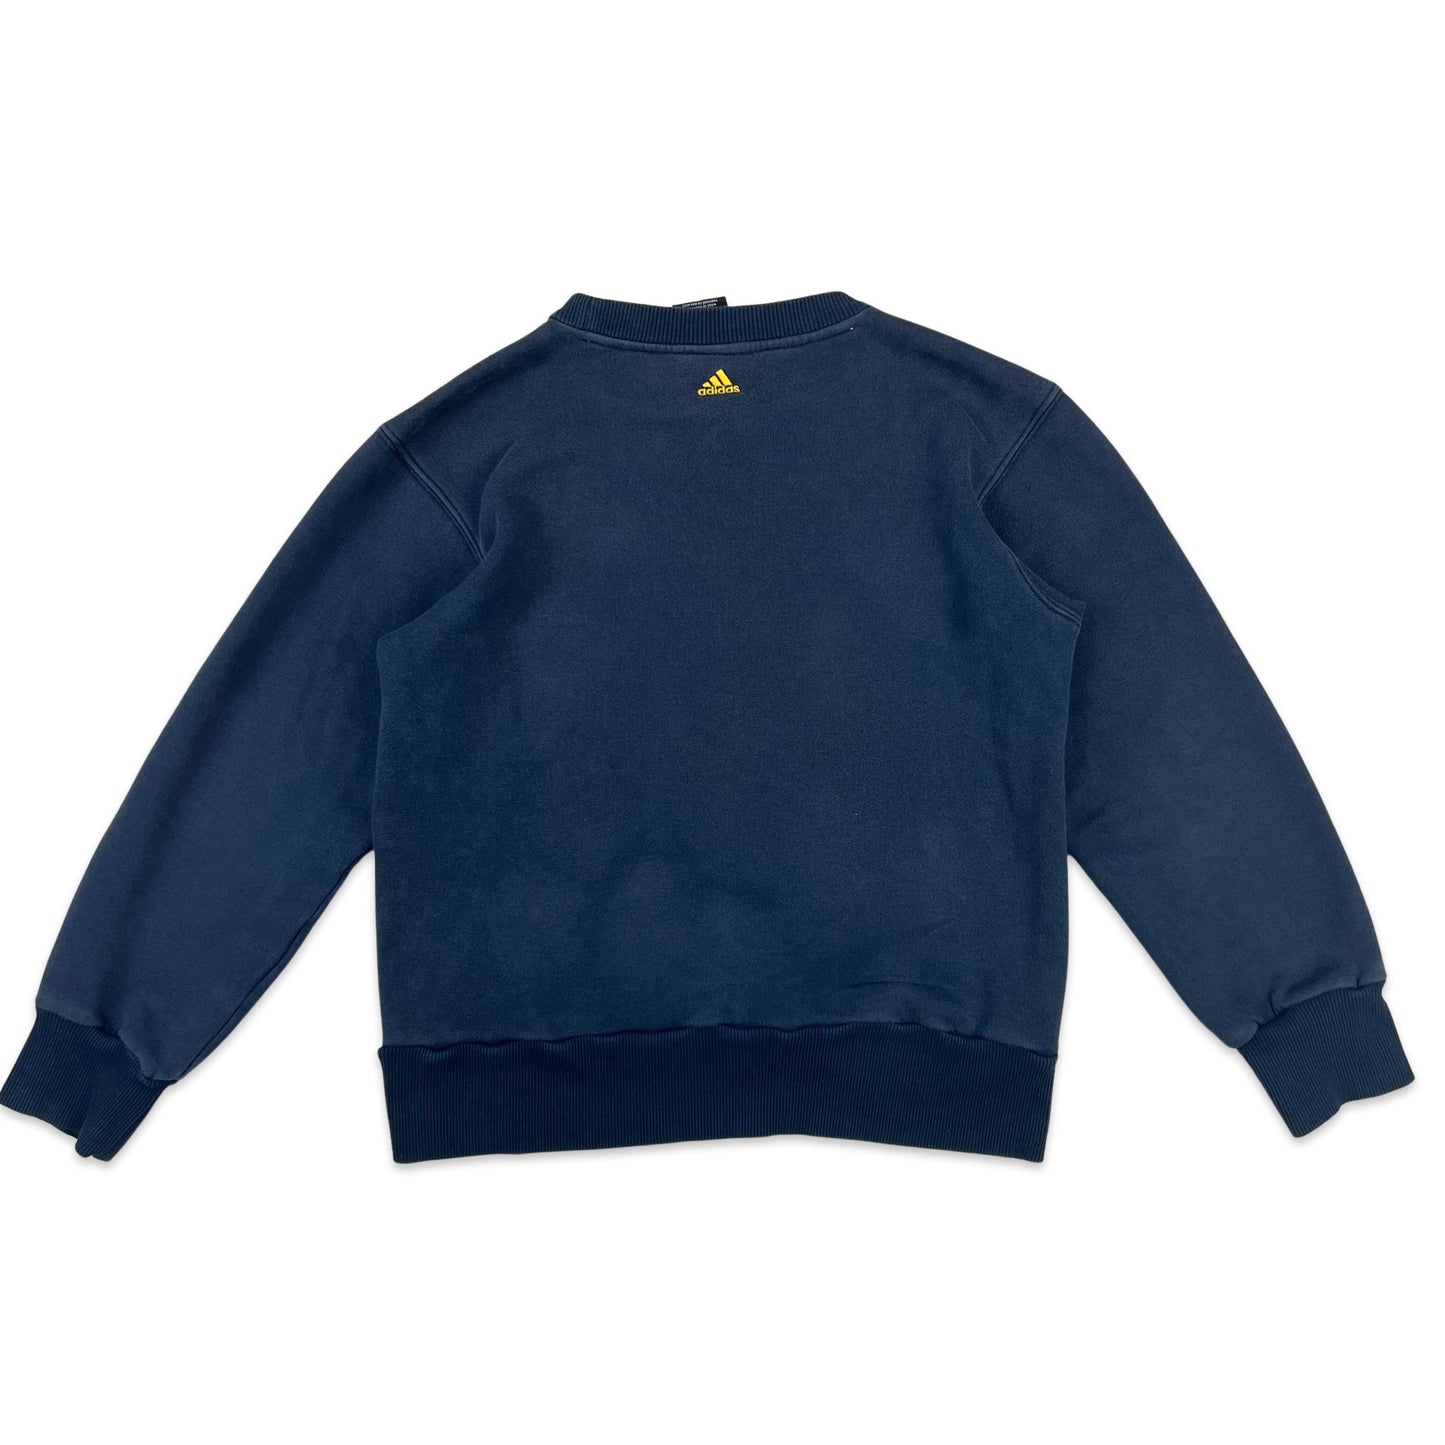 Vintage 00s Adidas Spellout Sweatshirt Navy Size Medium